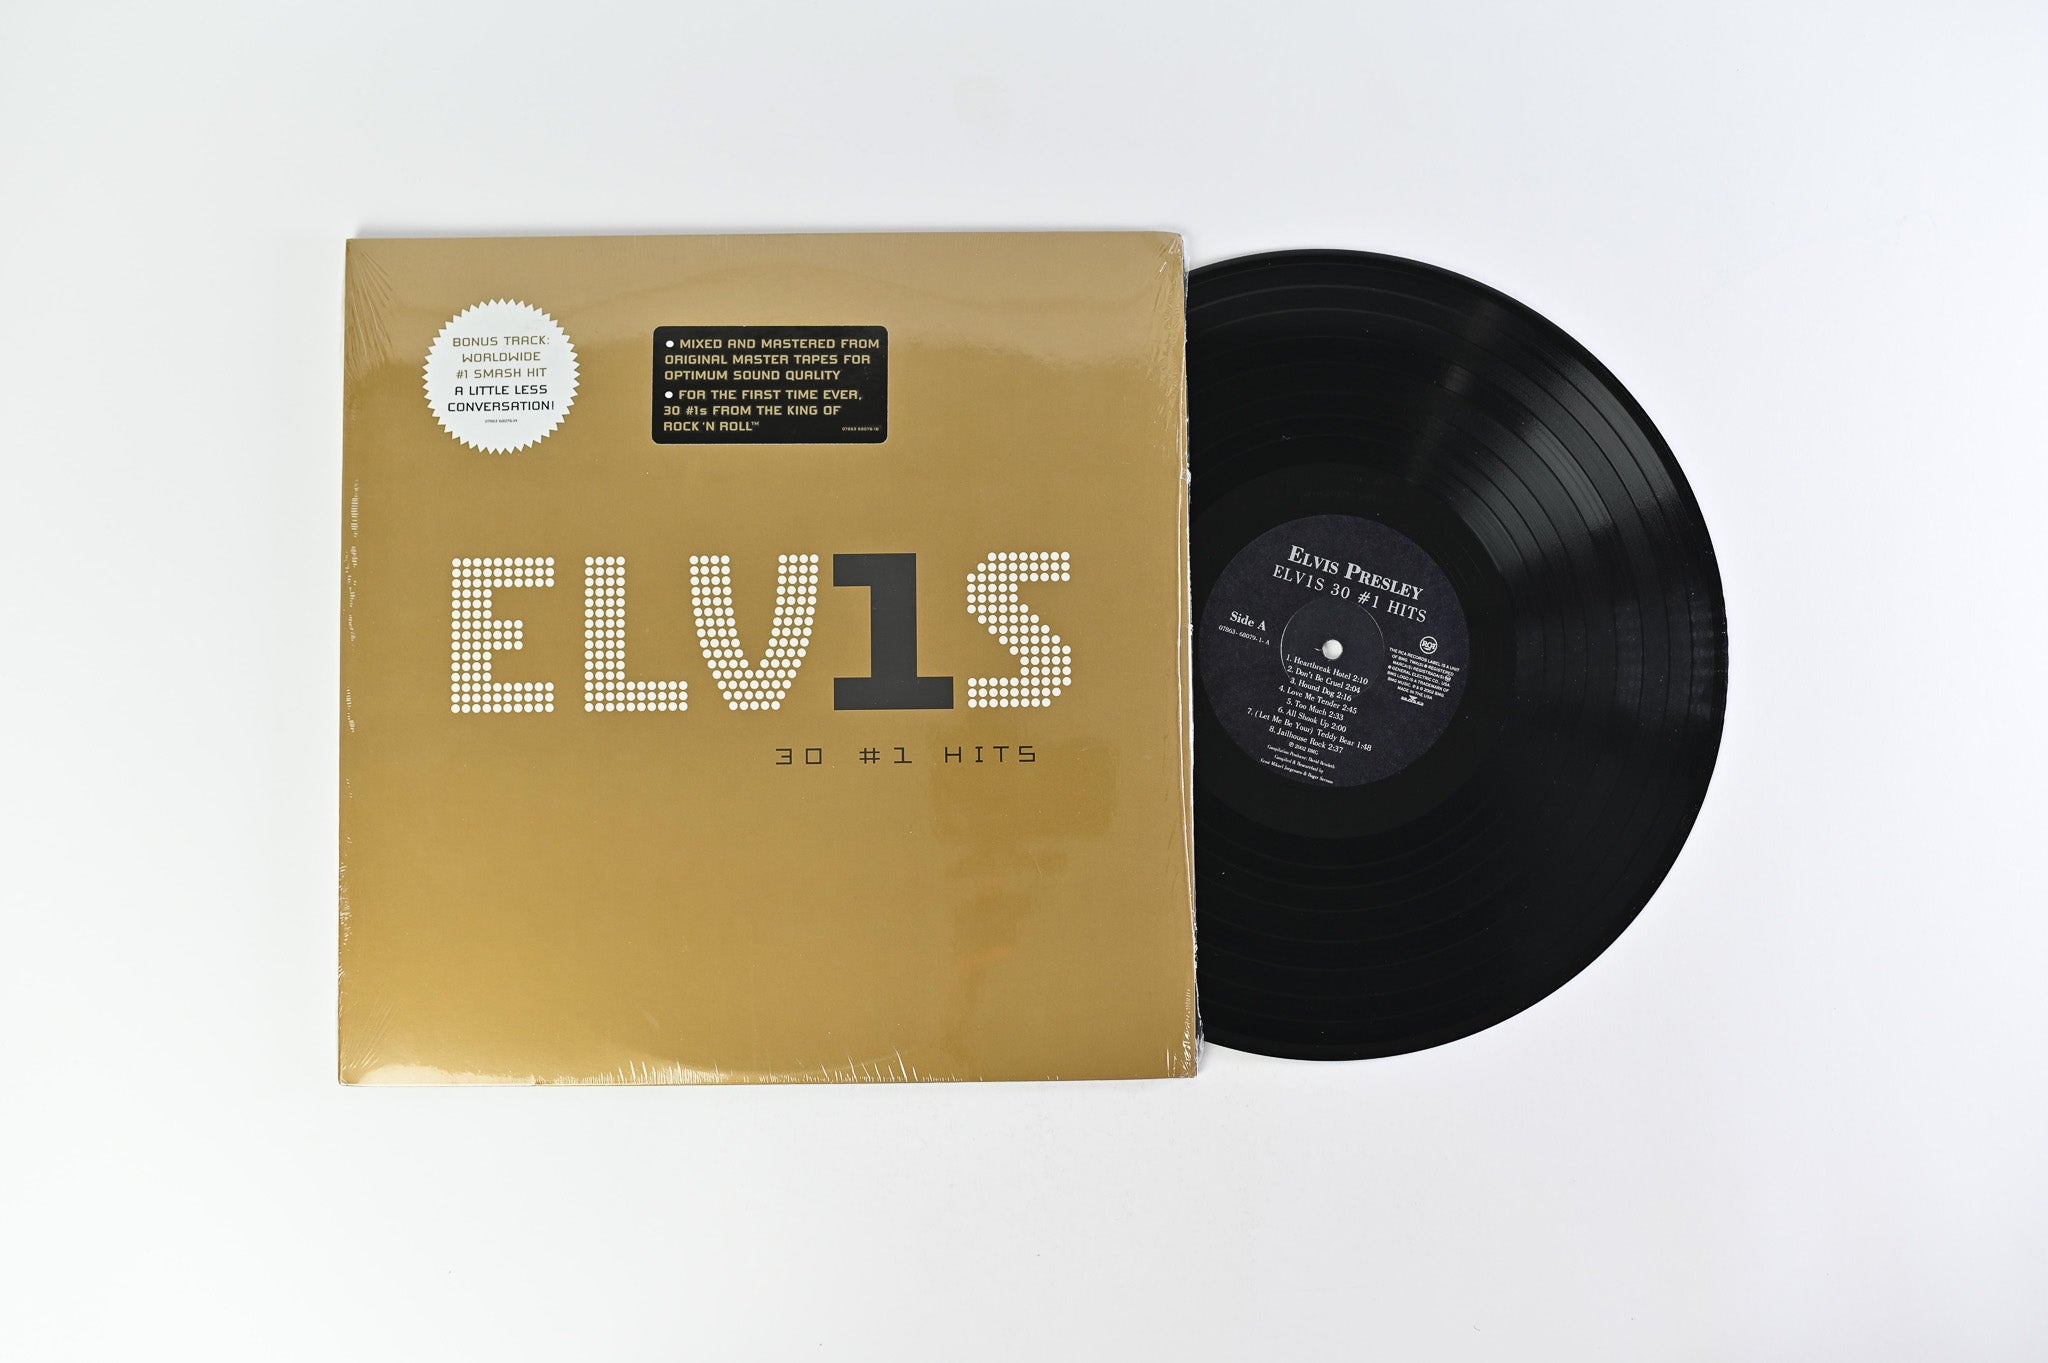 Elvis Presley - ELV1S 30 #1 Hits on RCA